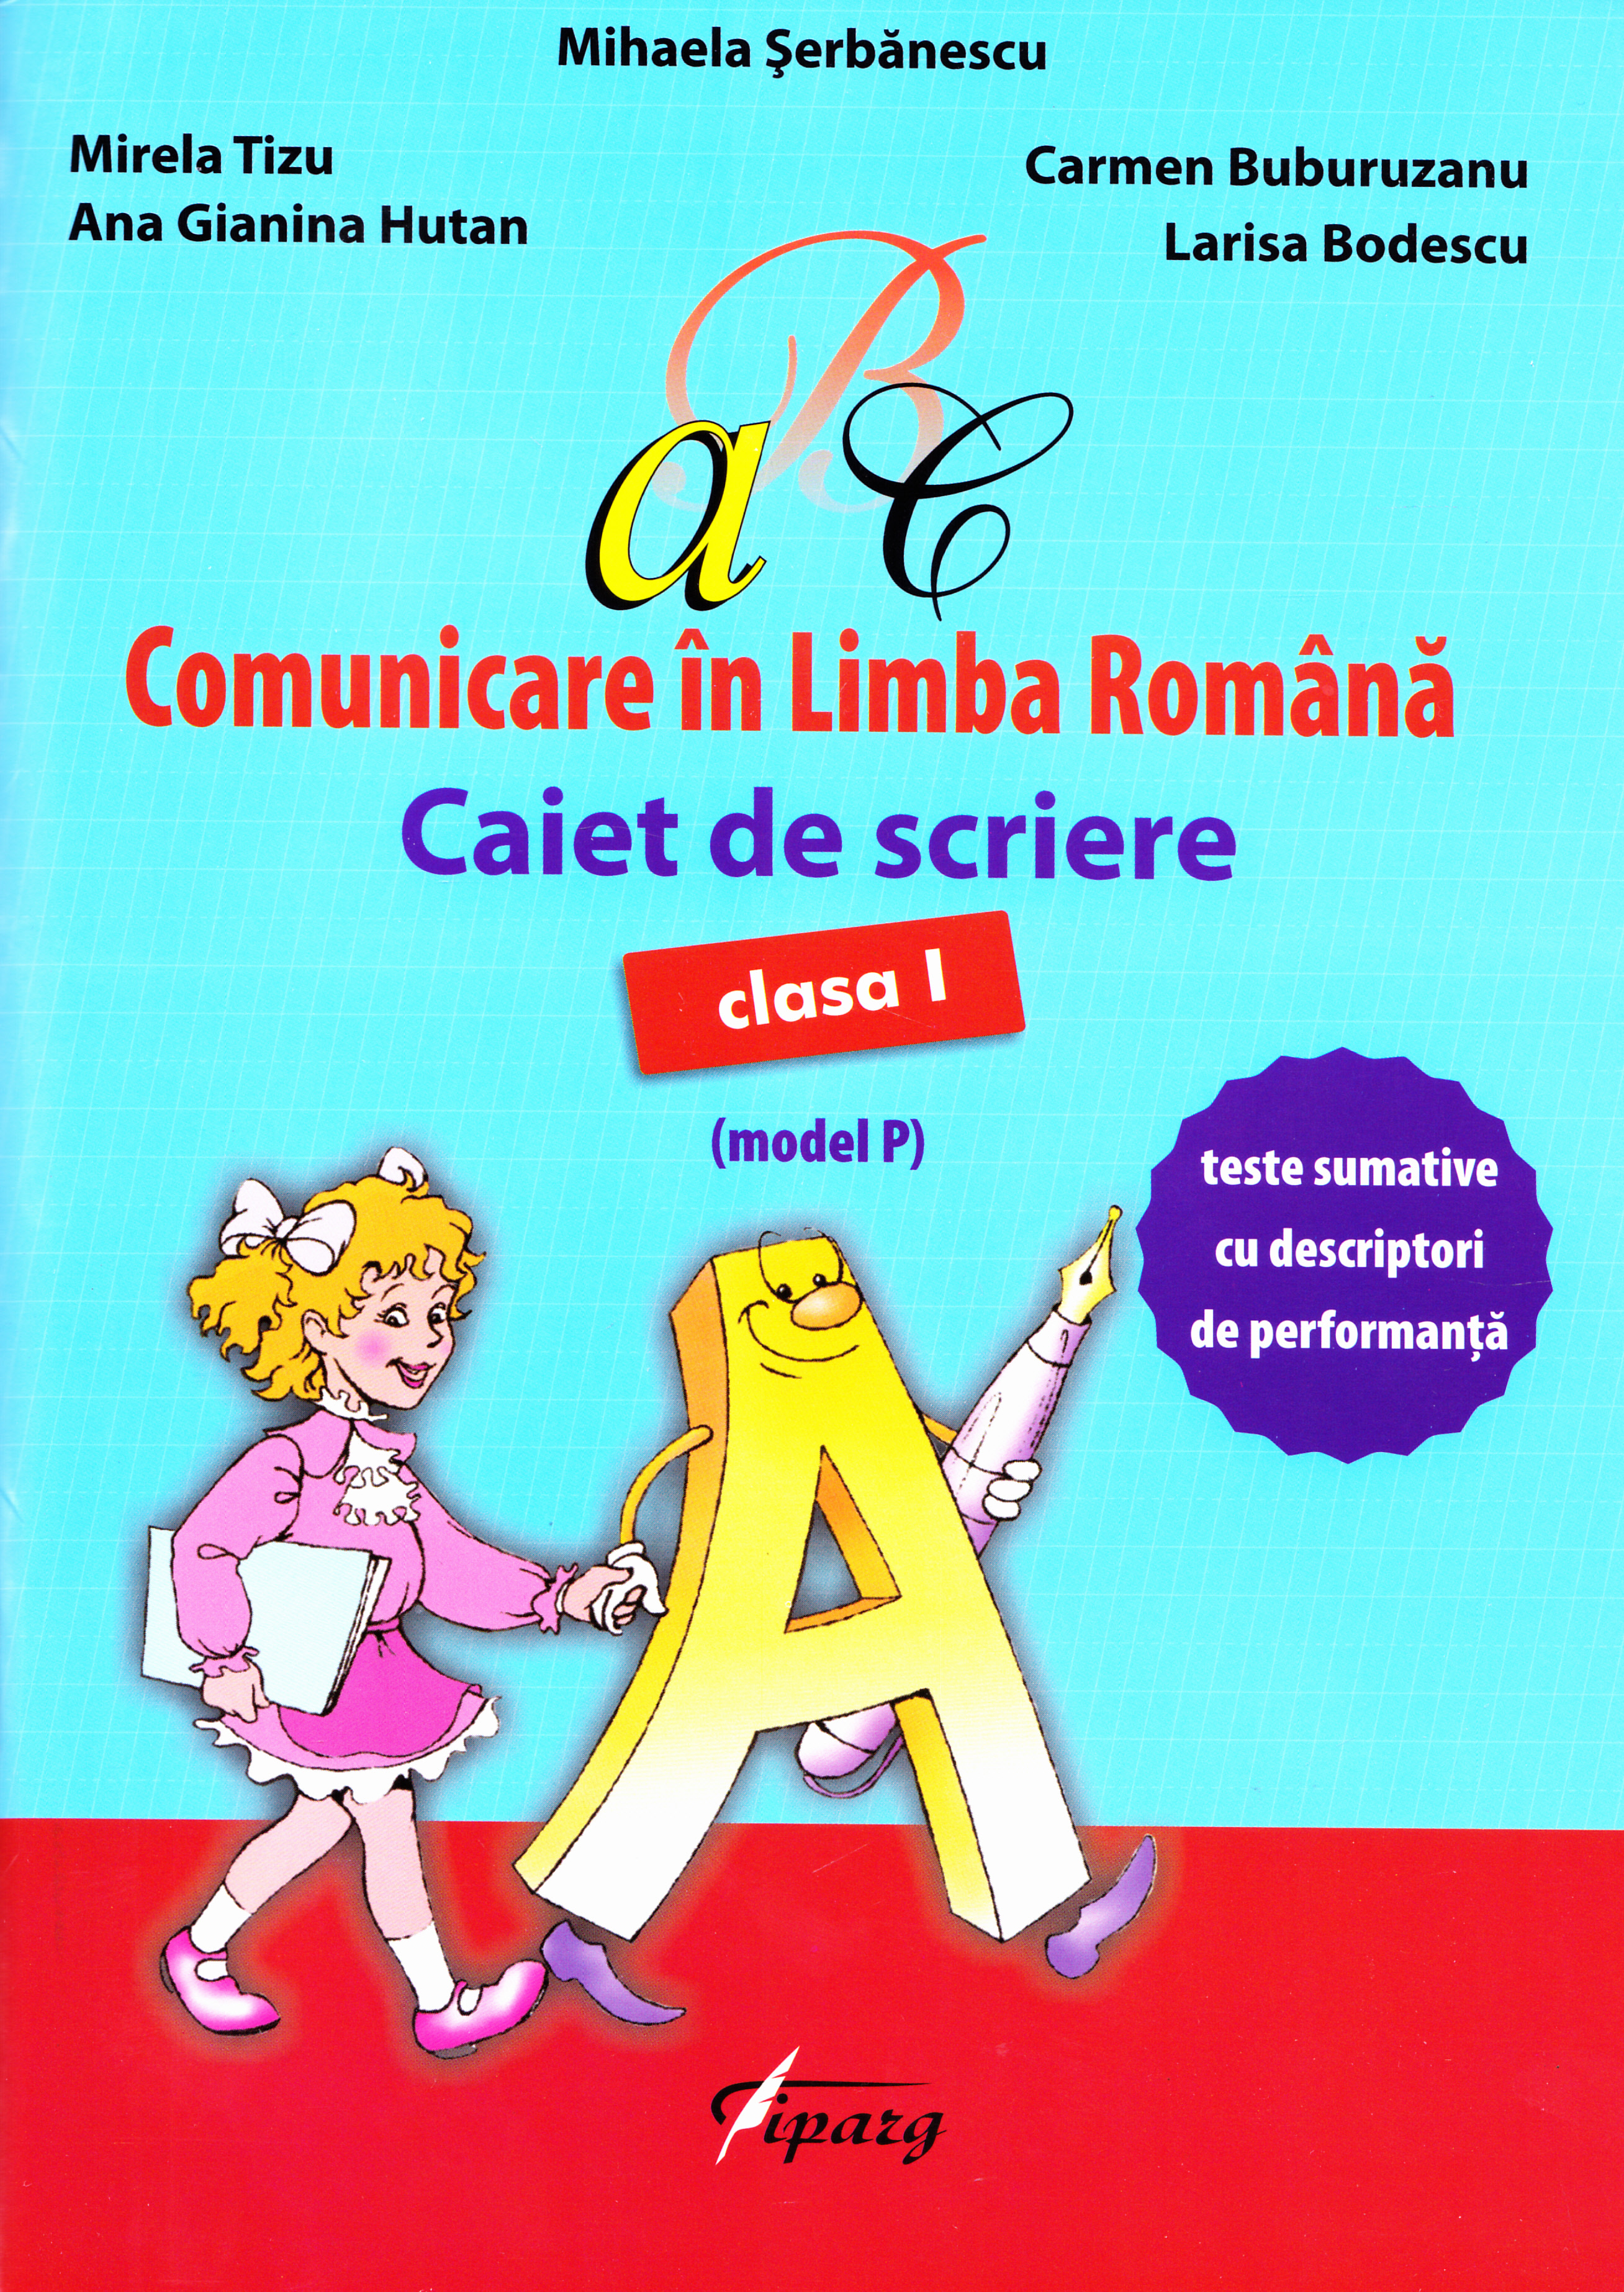 Comunicare in limba romana - Clasa 1 - Caiet de scriere (model P) - Mihaela Serbanescu